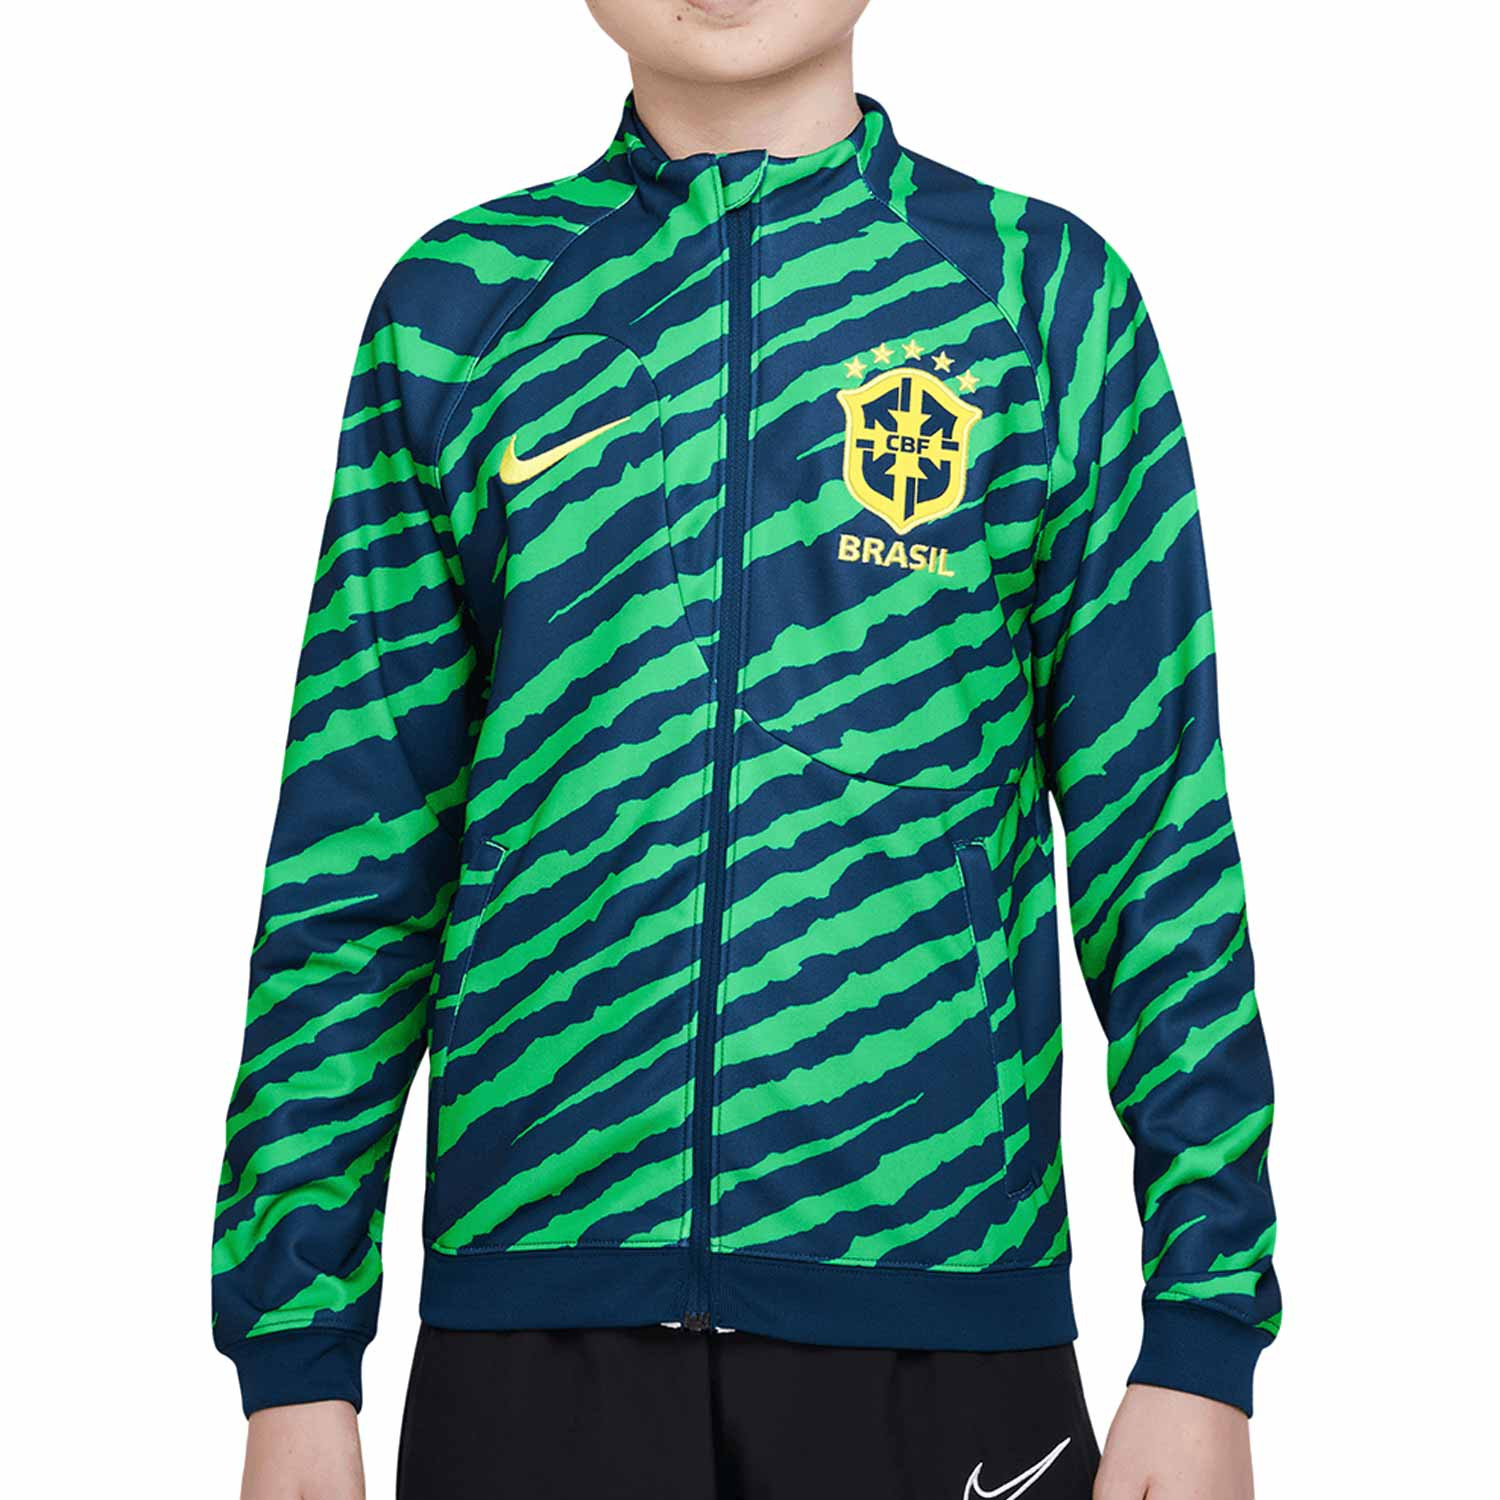 Chaqueta infantil Nike Brasil verde y |